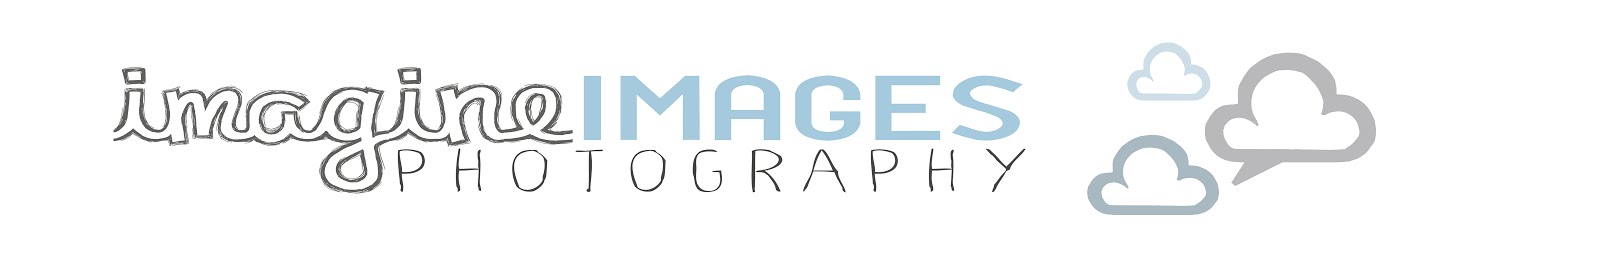 Imagine Images Photography